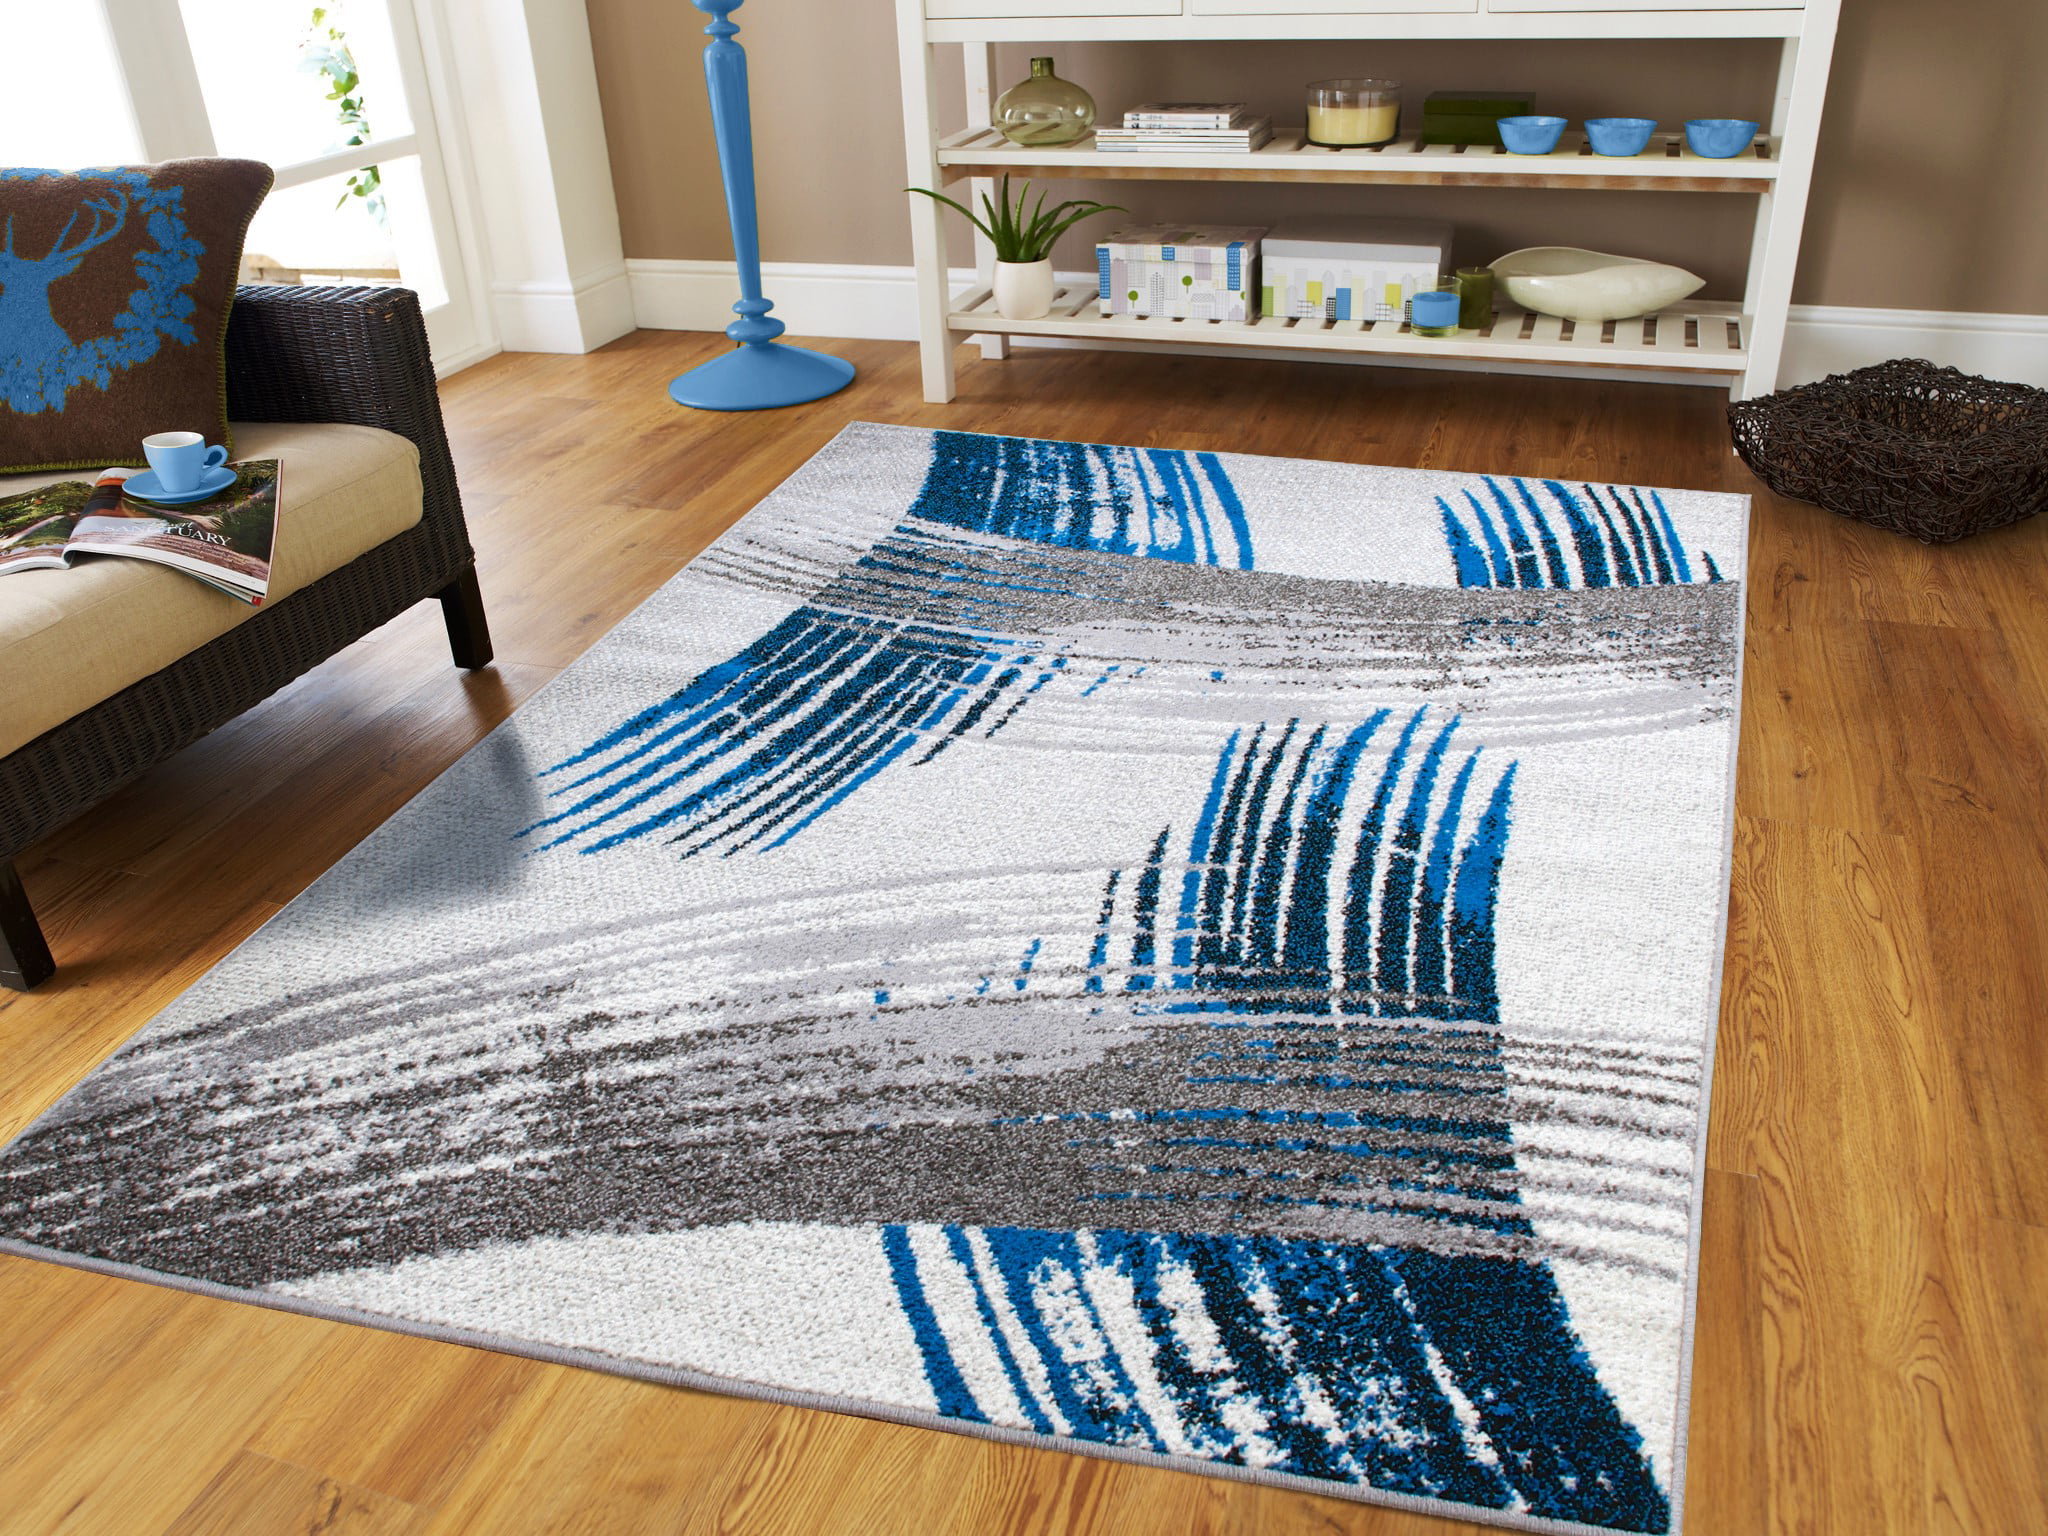 large dining room rug